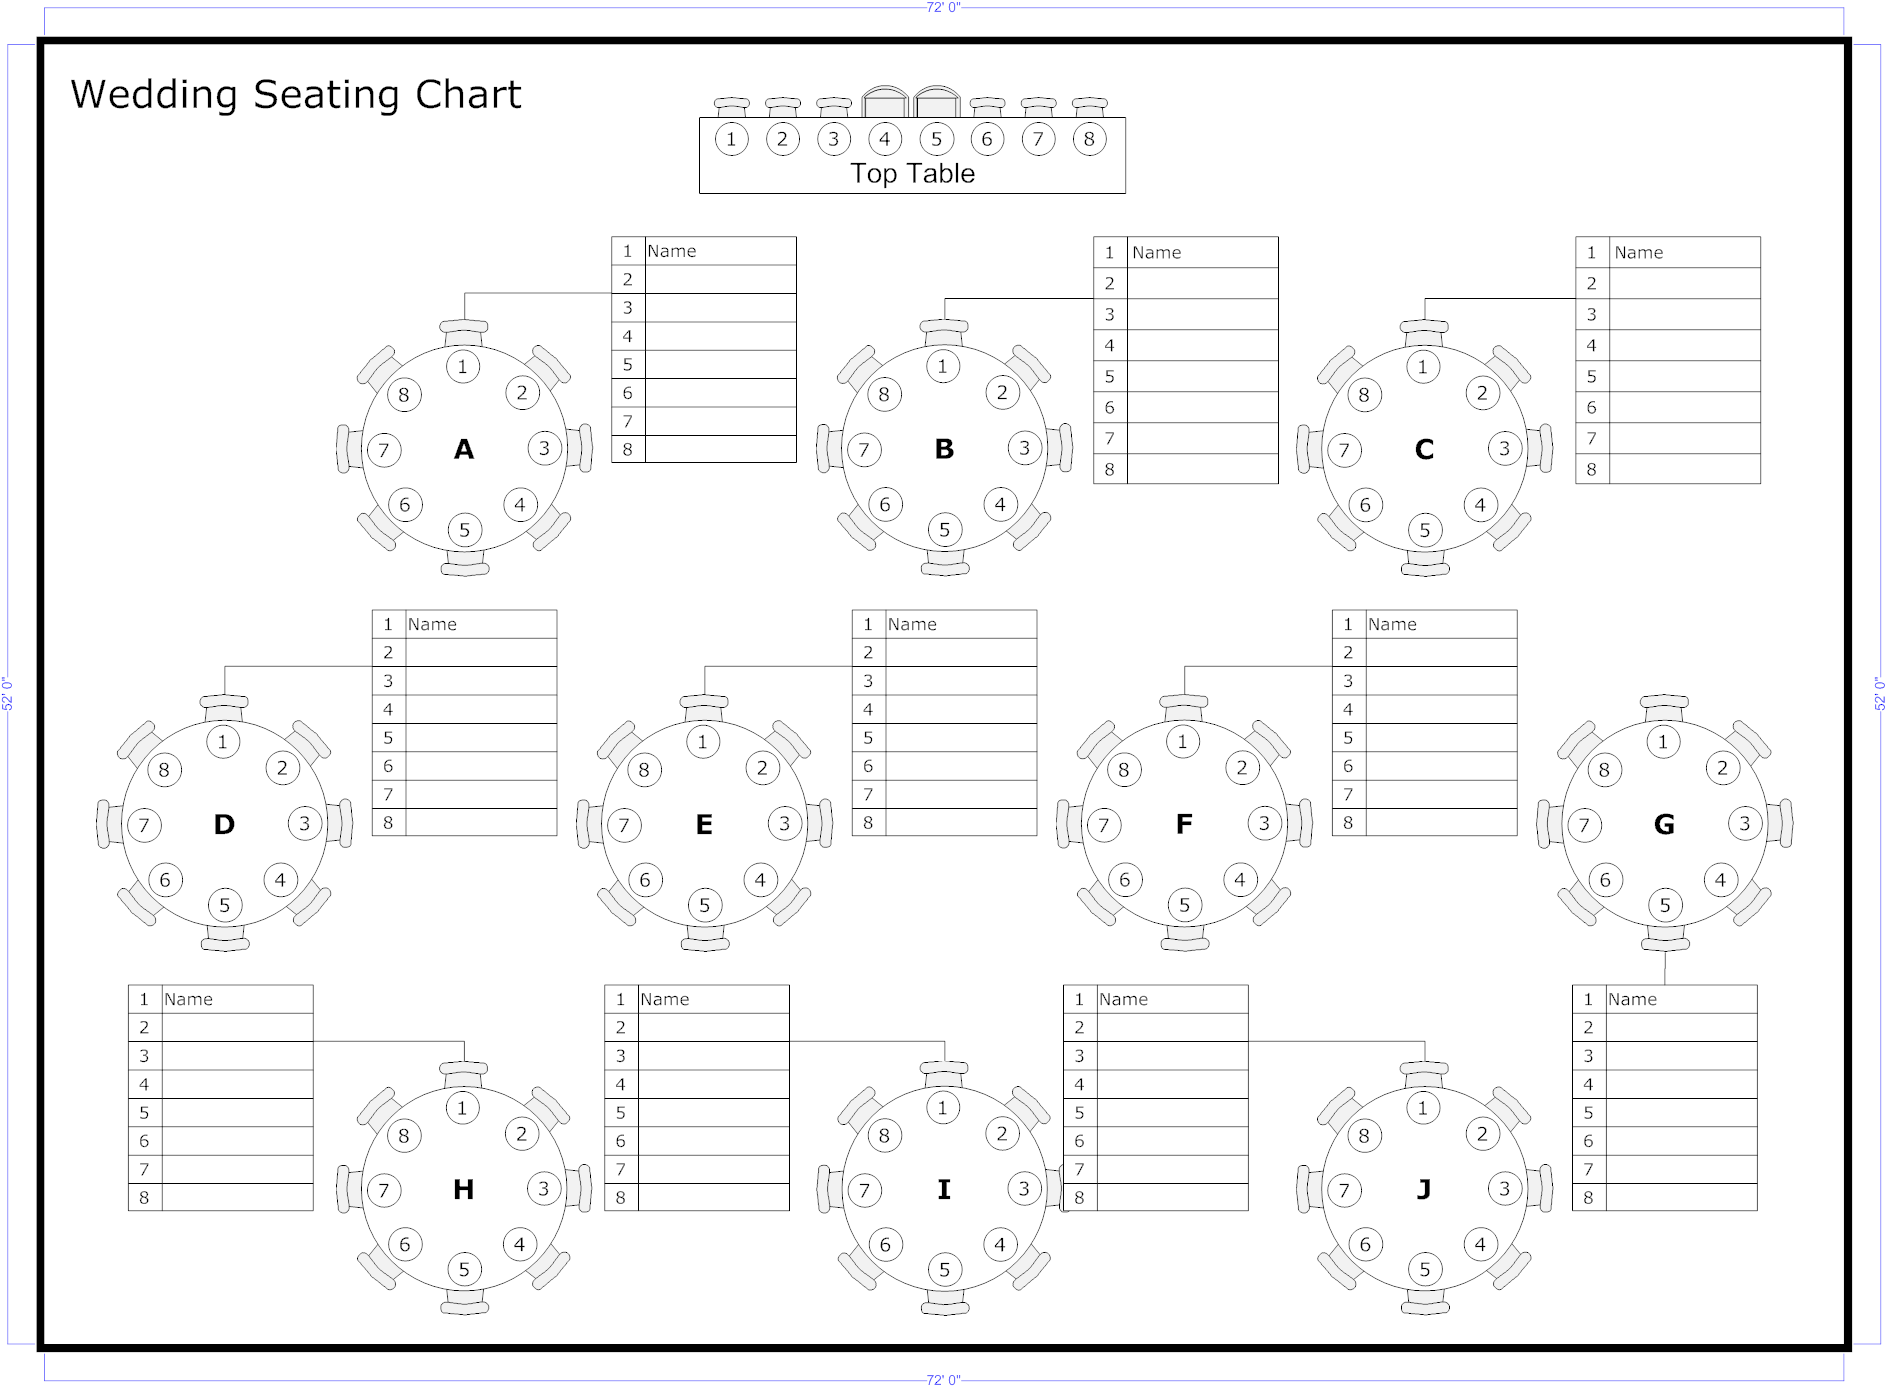 Seating Chart - Make a Seating Chart, Seating Chart Templates